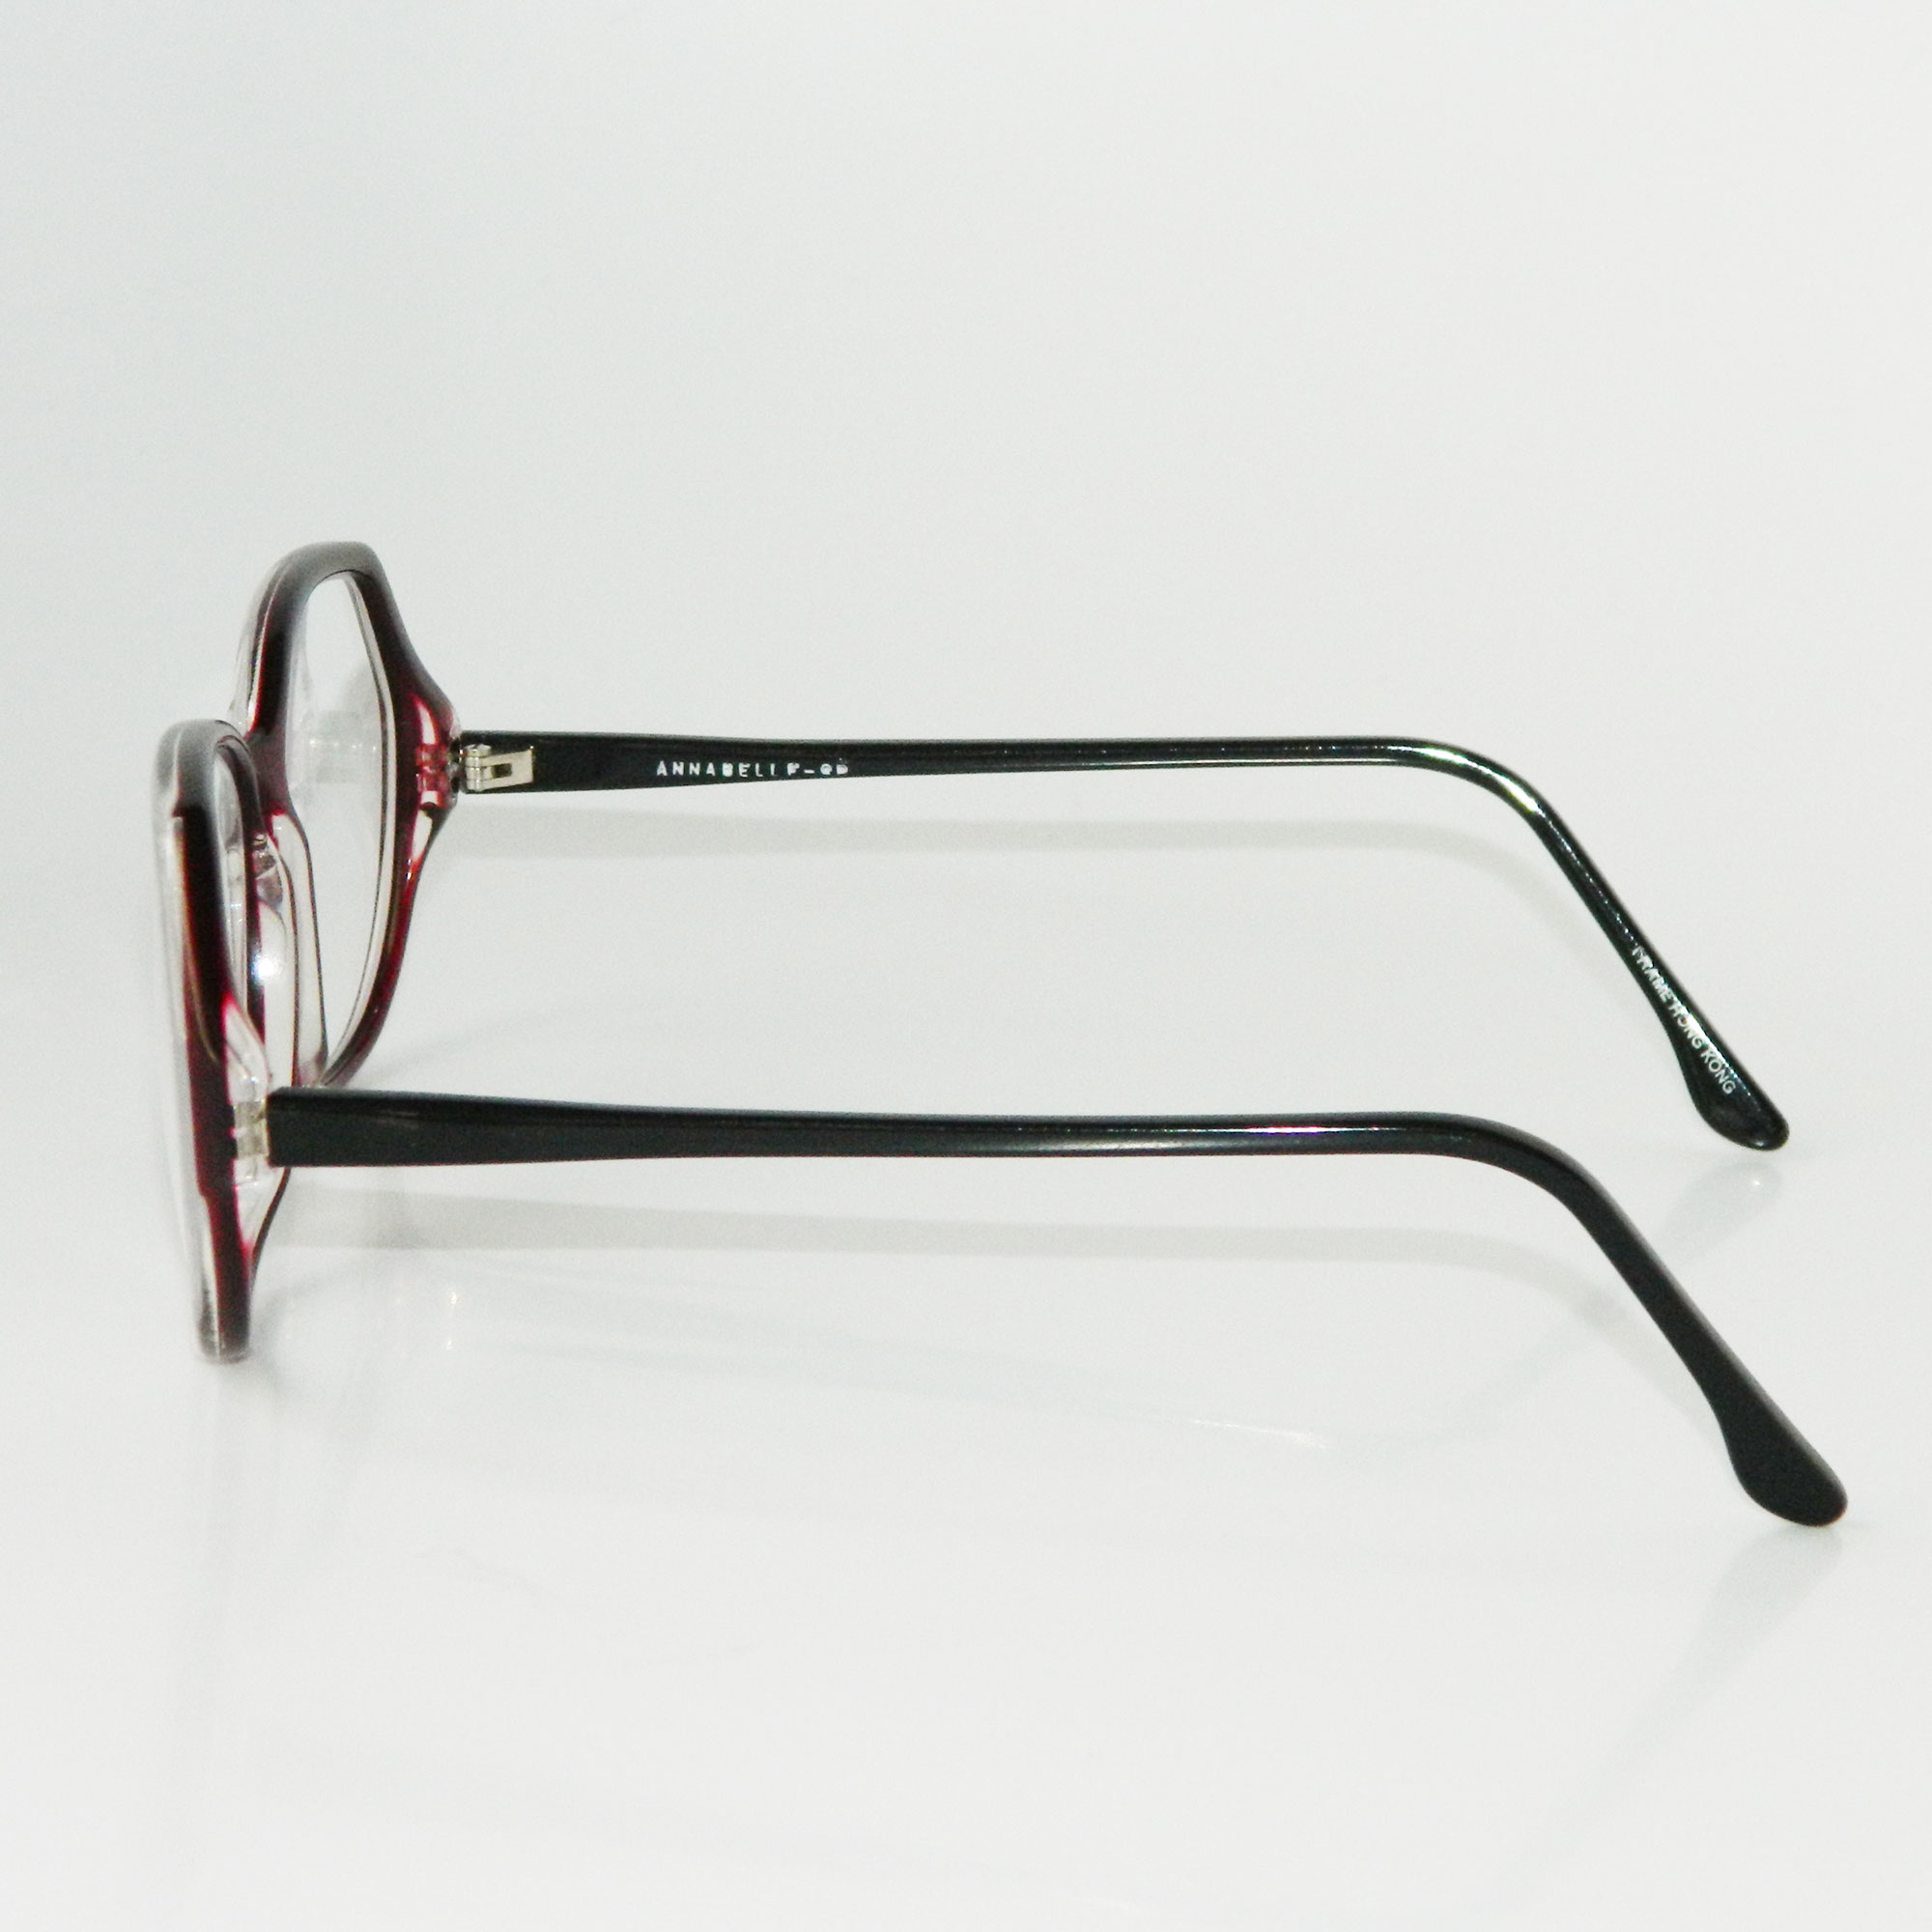 1980s red eyeglass frames